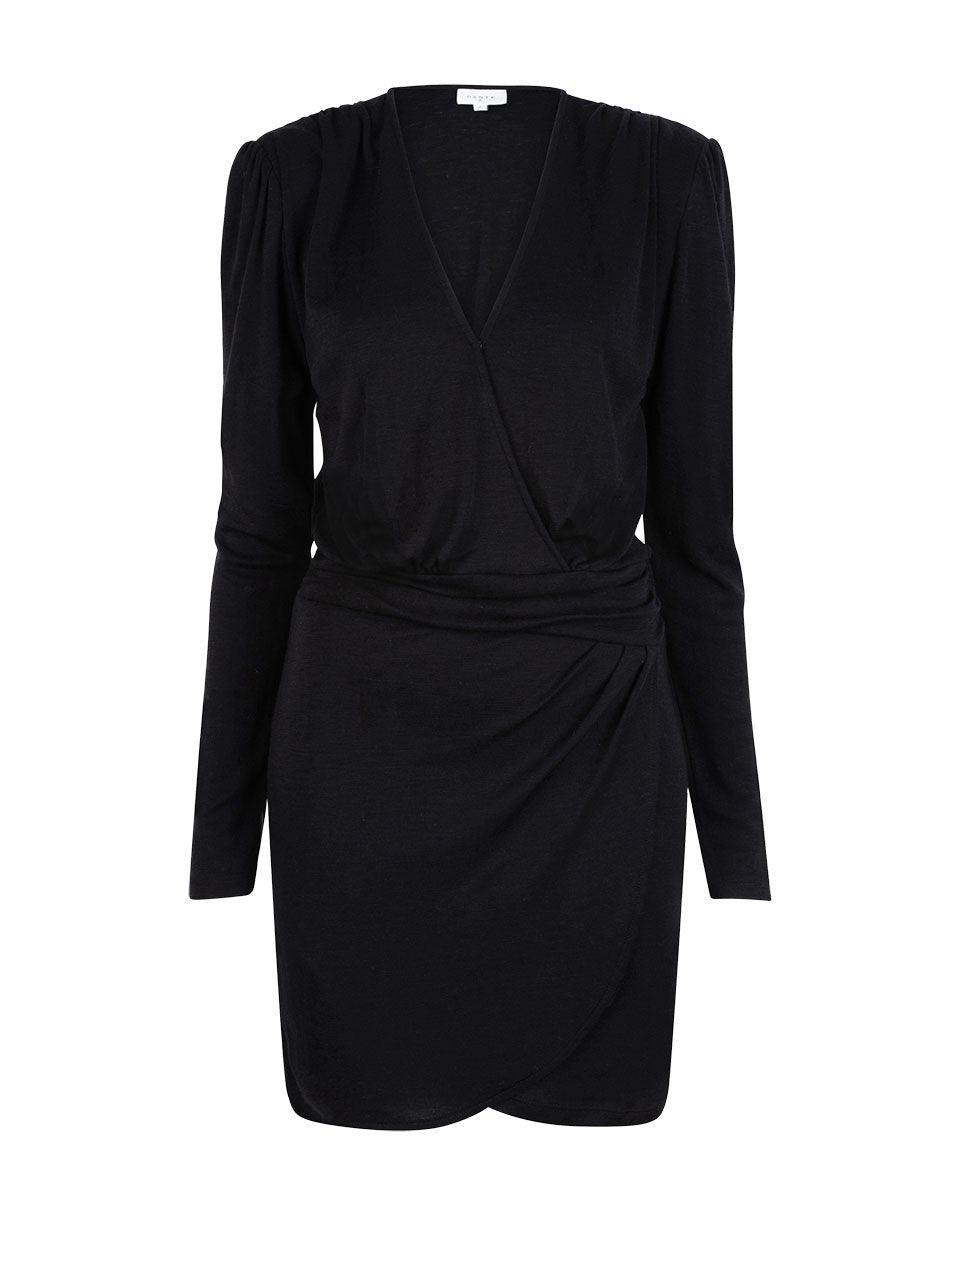 Roulette Knitted Dress Black - No22 Damplassen